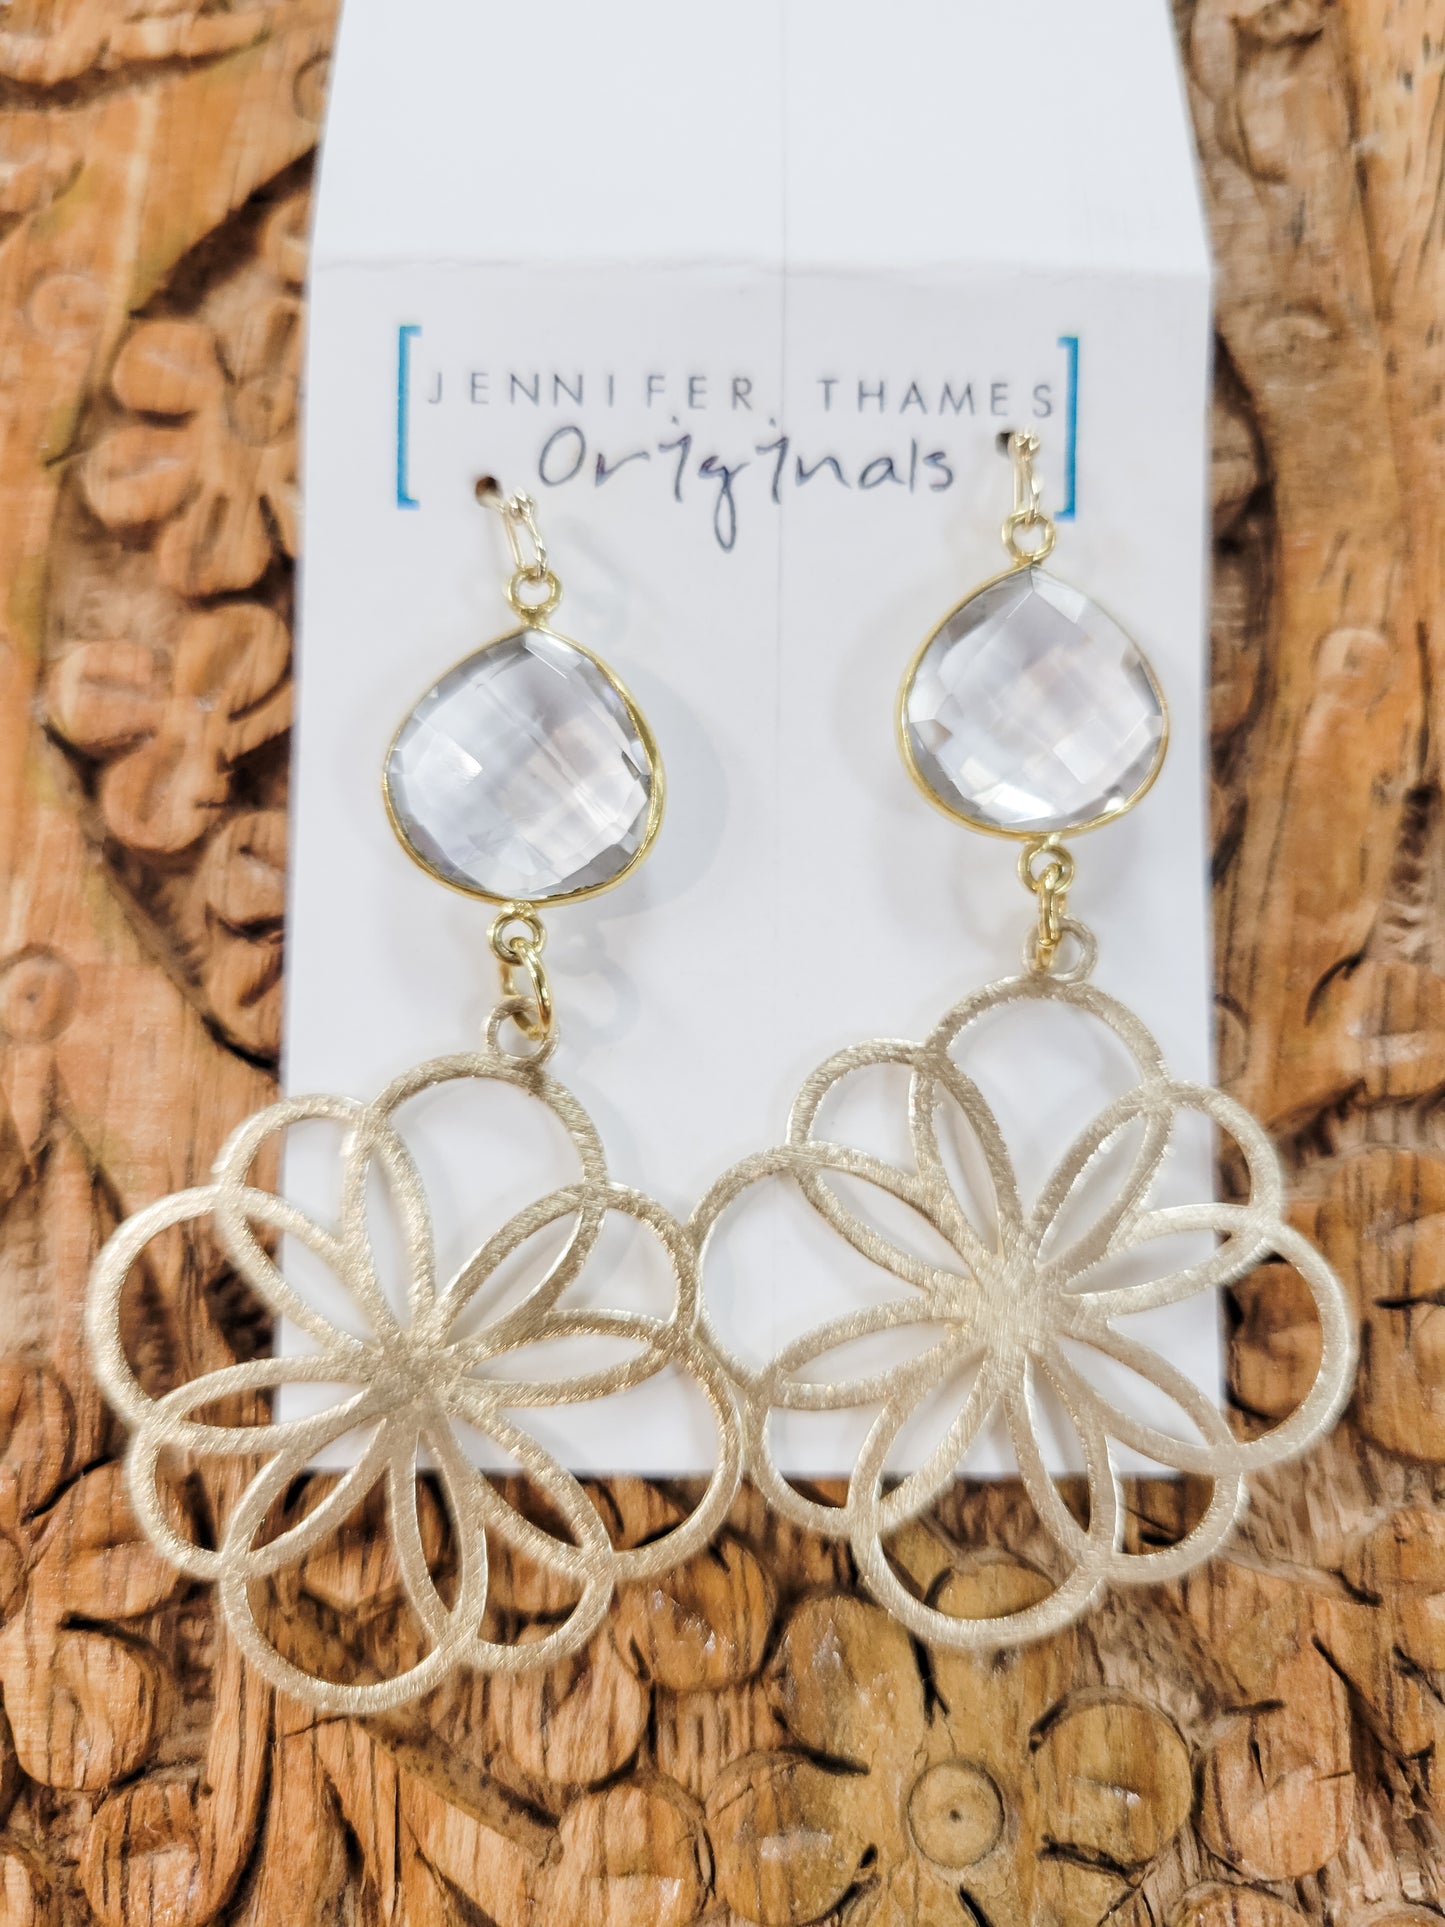 Spring Fling Earrings (Jennifer Thames Originals)